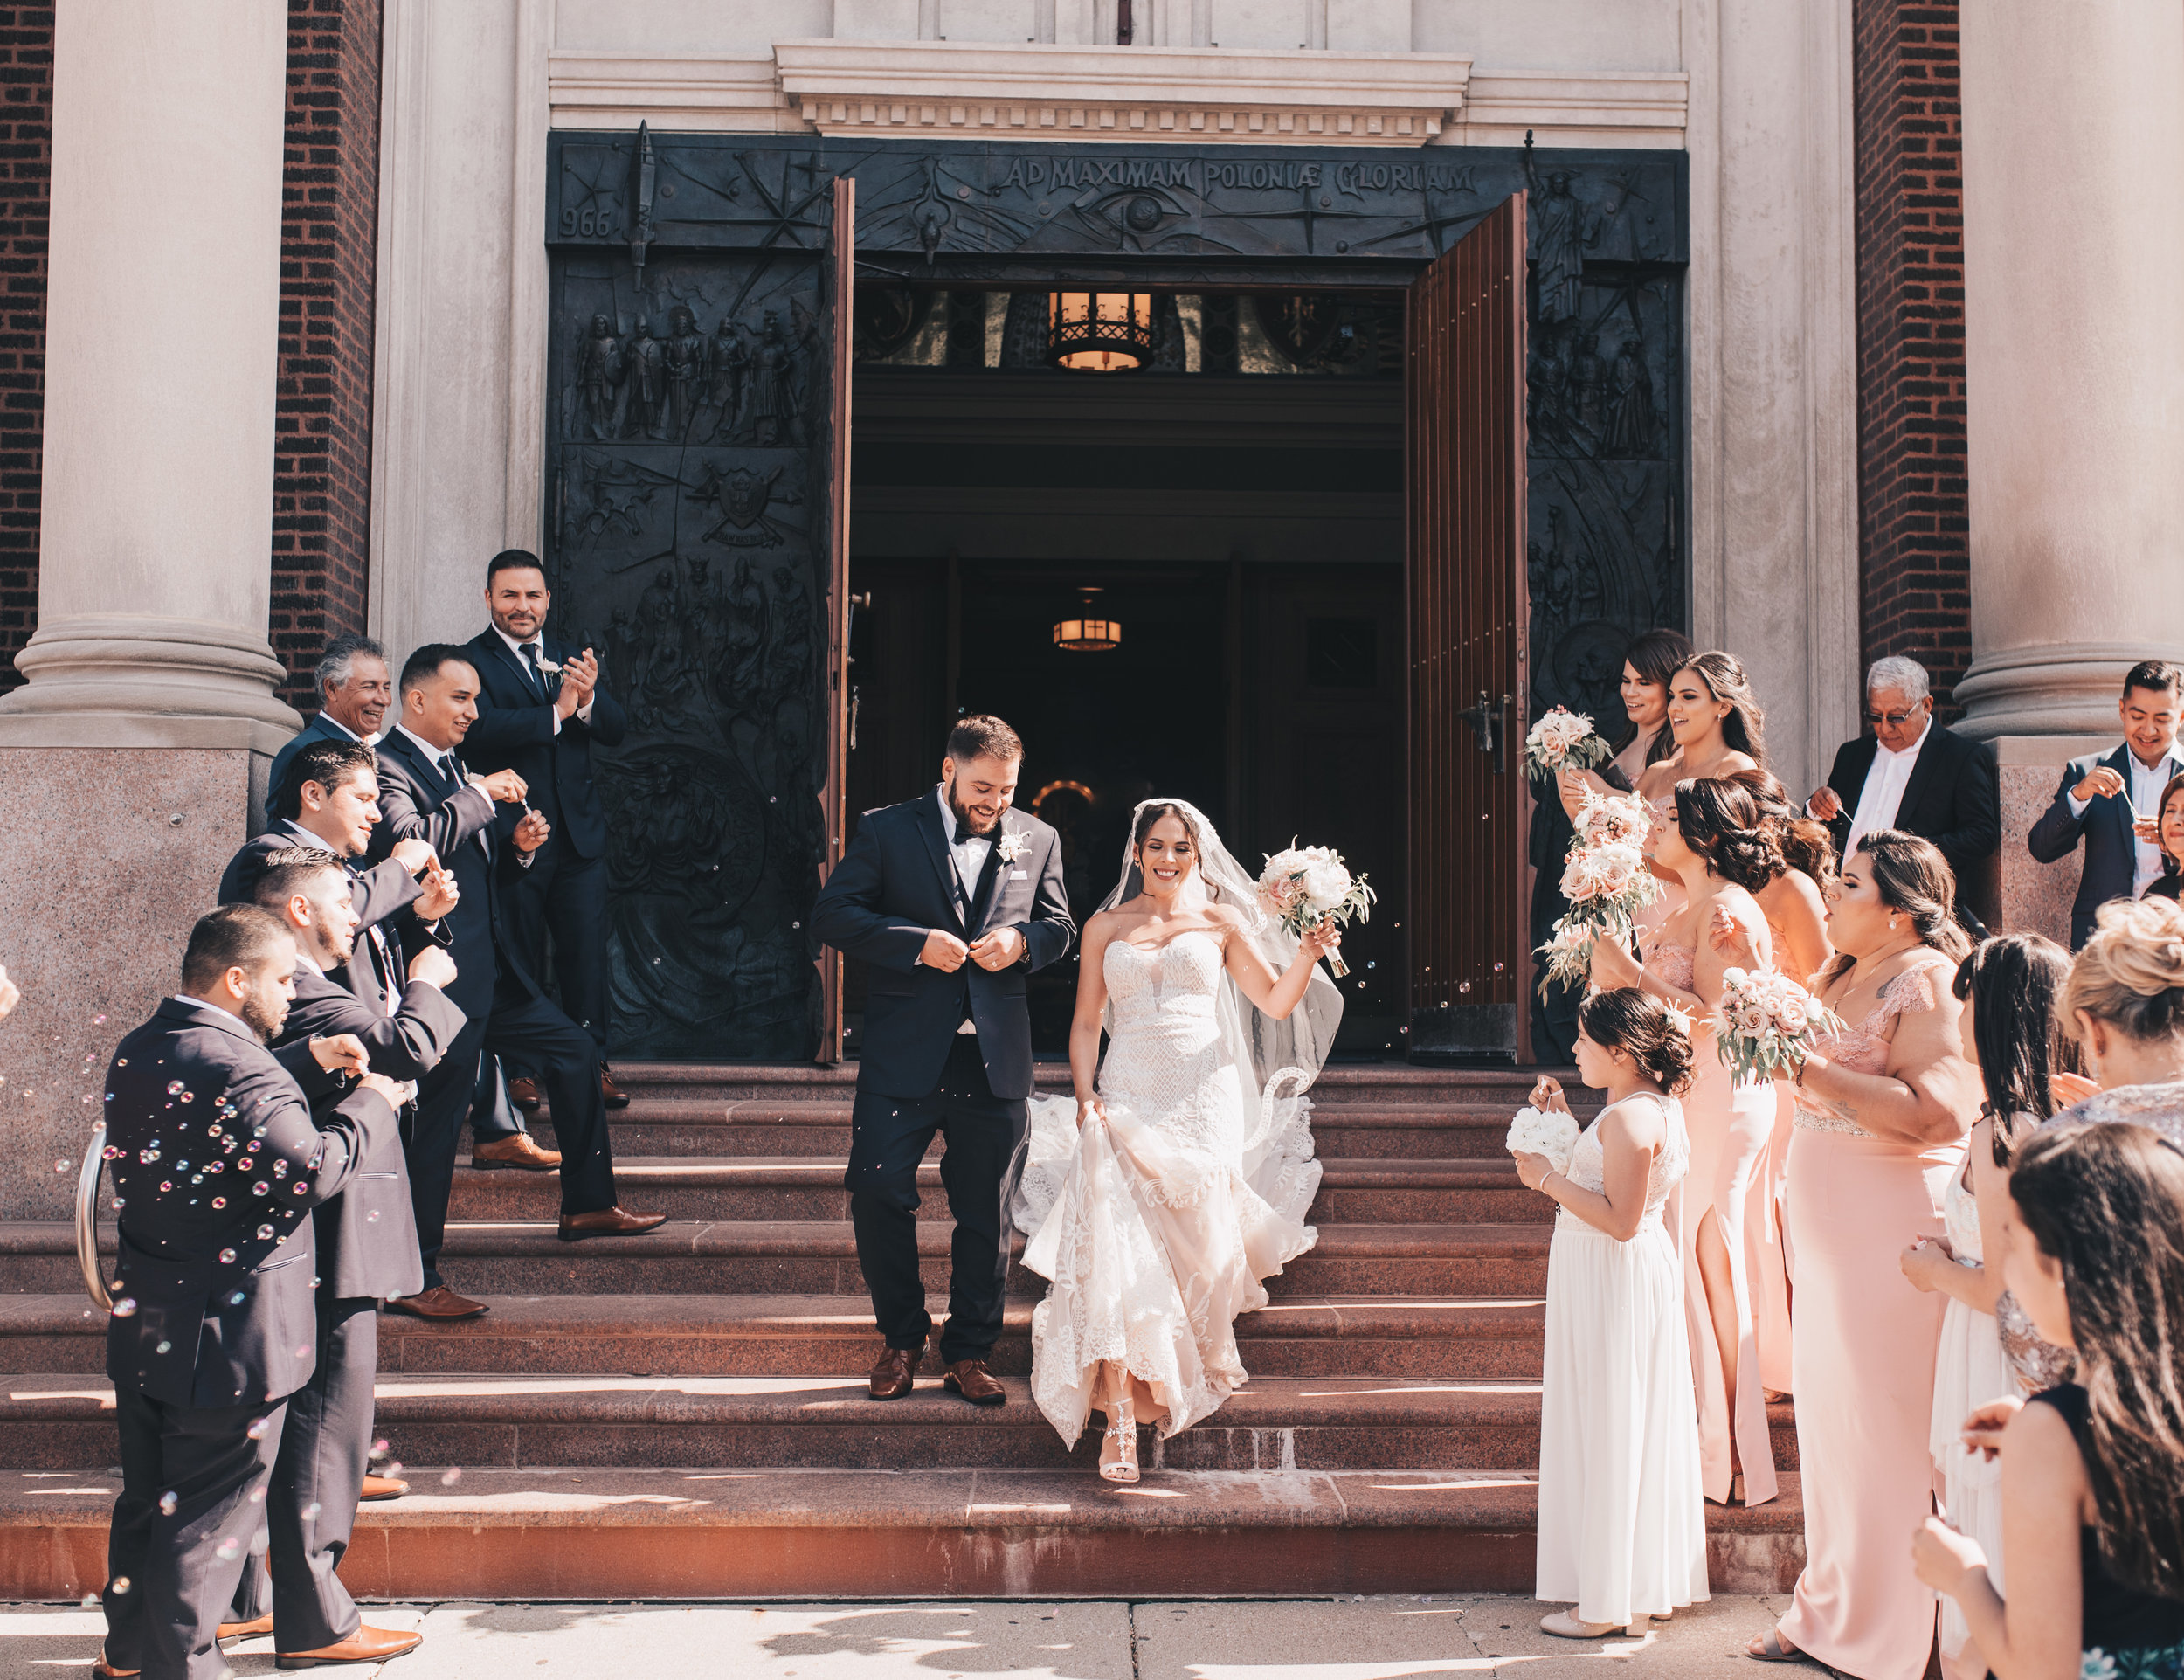 Illinois Wedding, Midwest Wedding, Chicago Wedding, Church Wedding Ceremony, Wedding Bubble Exit, Bride and Groom Photos 